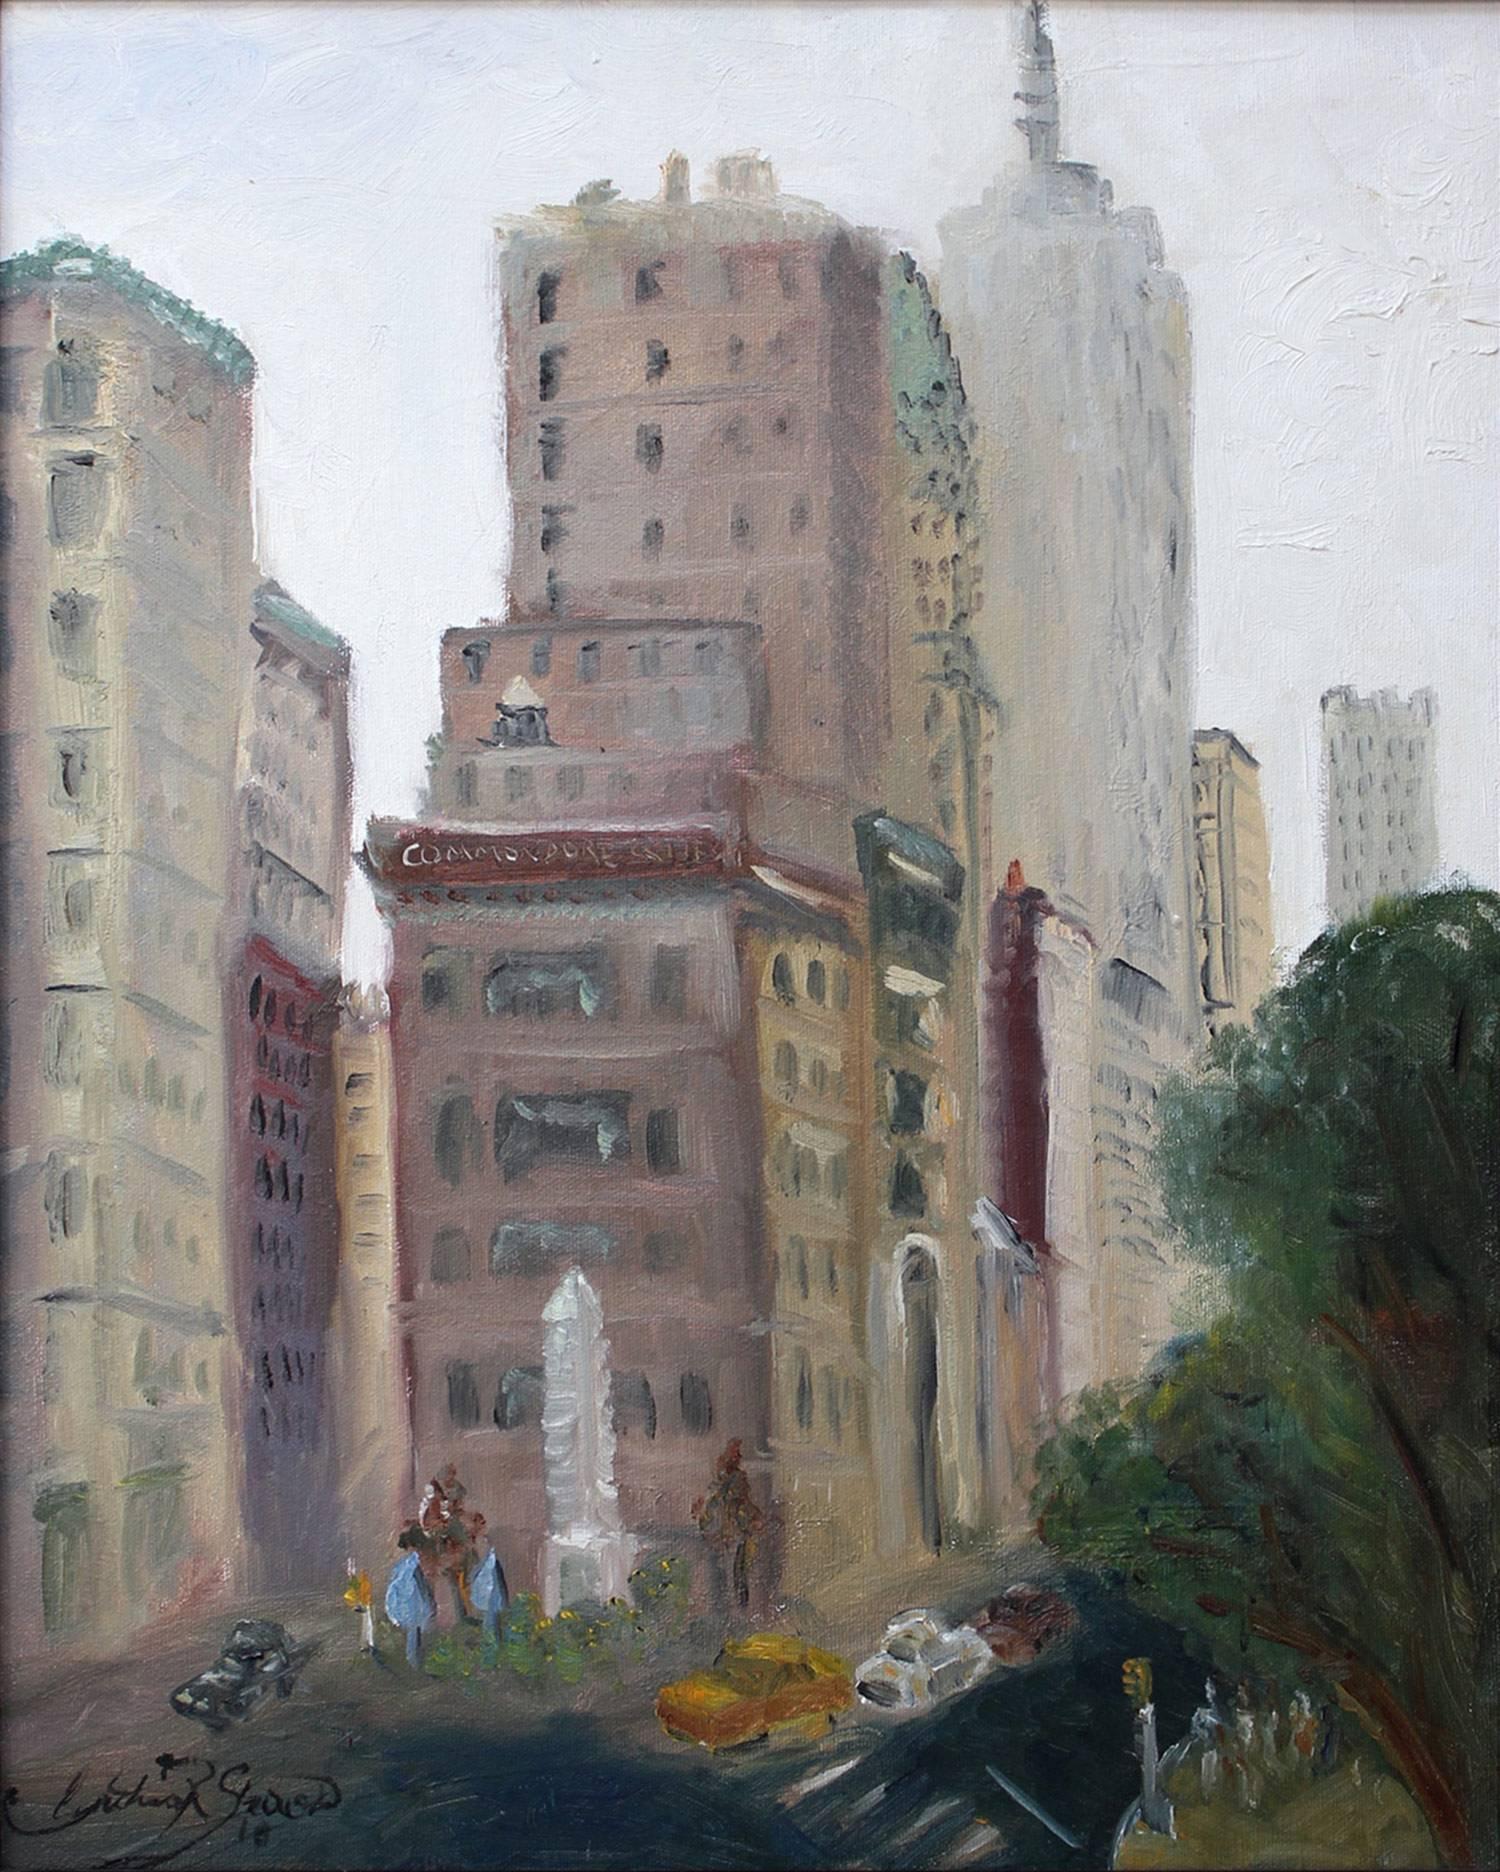 Empire State View aus der 5th Avenue – Painting von Cindy Shaoul